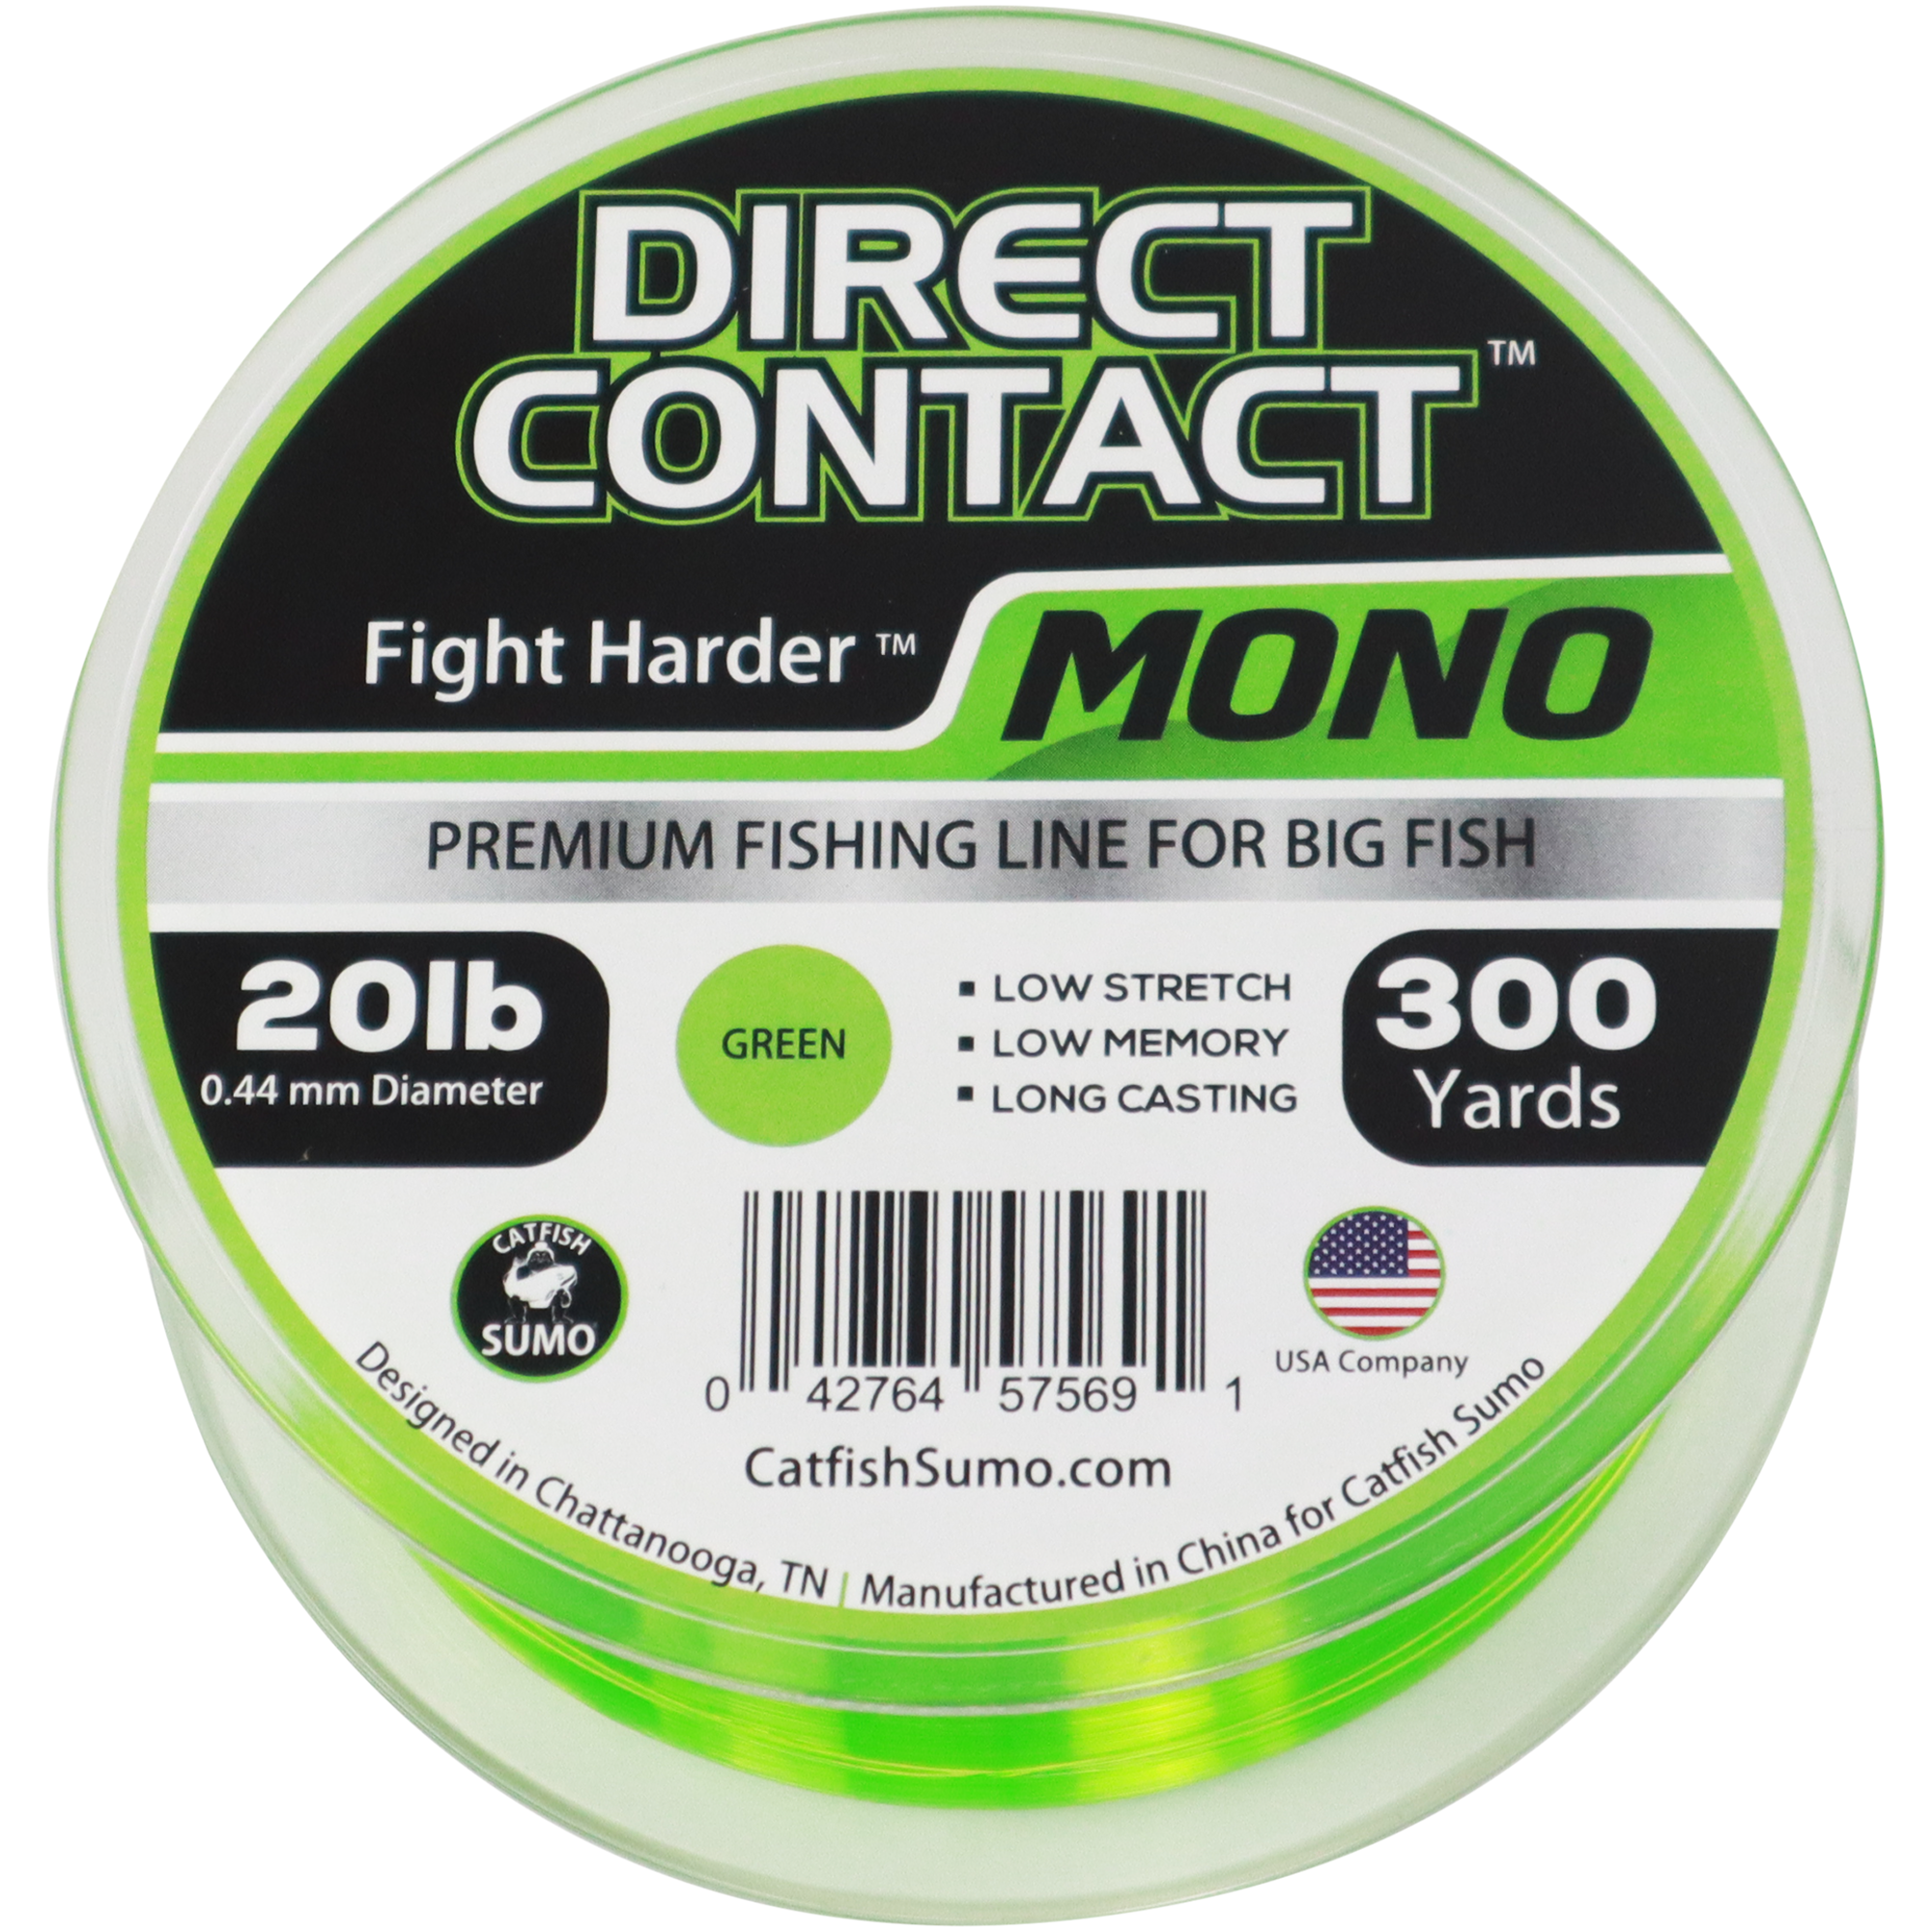 Direct Contact™ Premium Fishing Line for Big Fish, Mono, 300 Yard Spoo –  Catfish Sumo